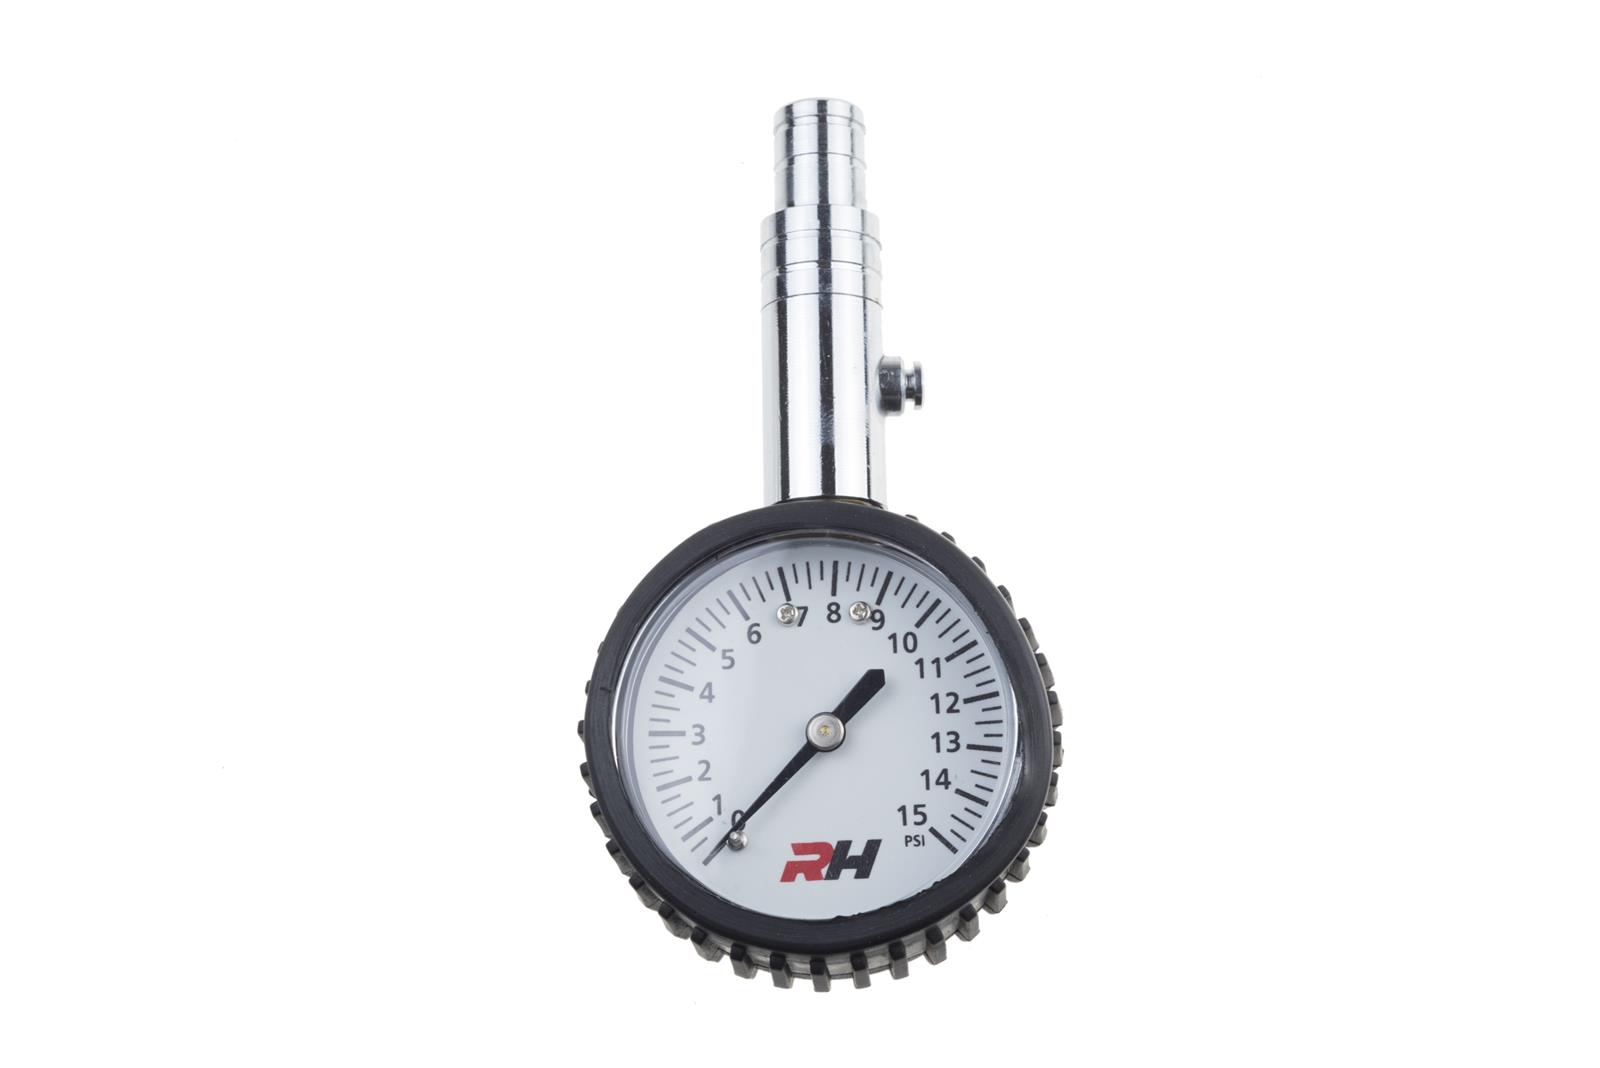 Redhorse Performance 5000-15S Tire pressure gauge NON HOSE - 0-15psi